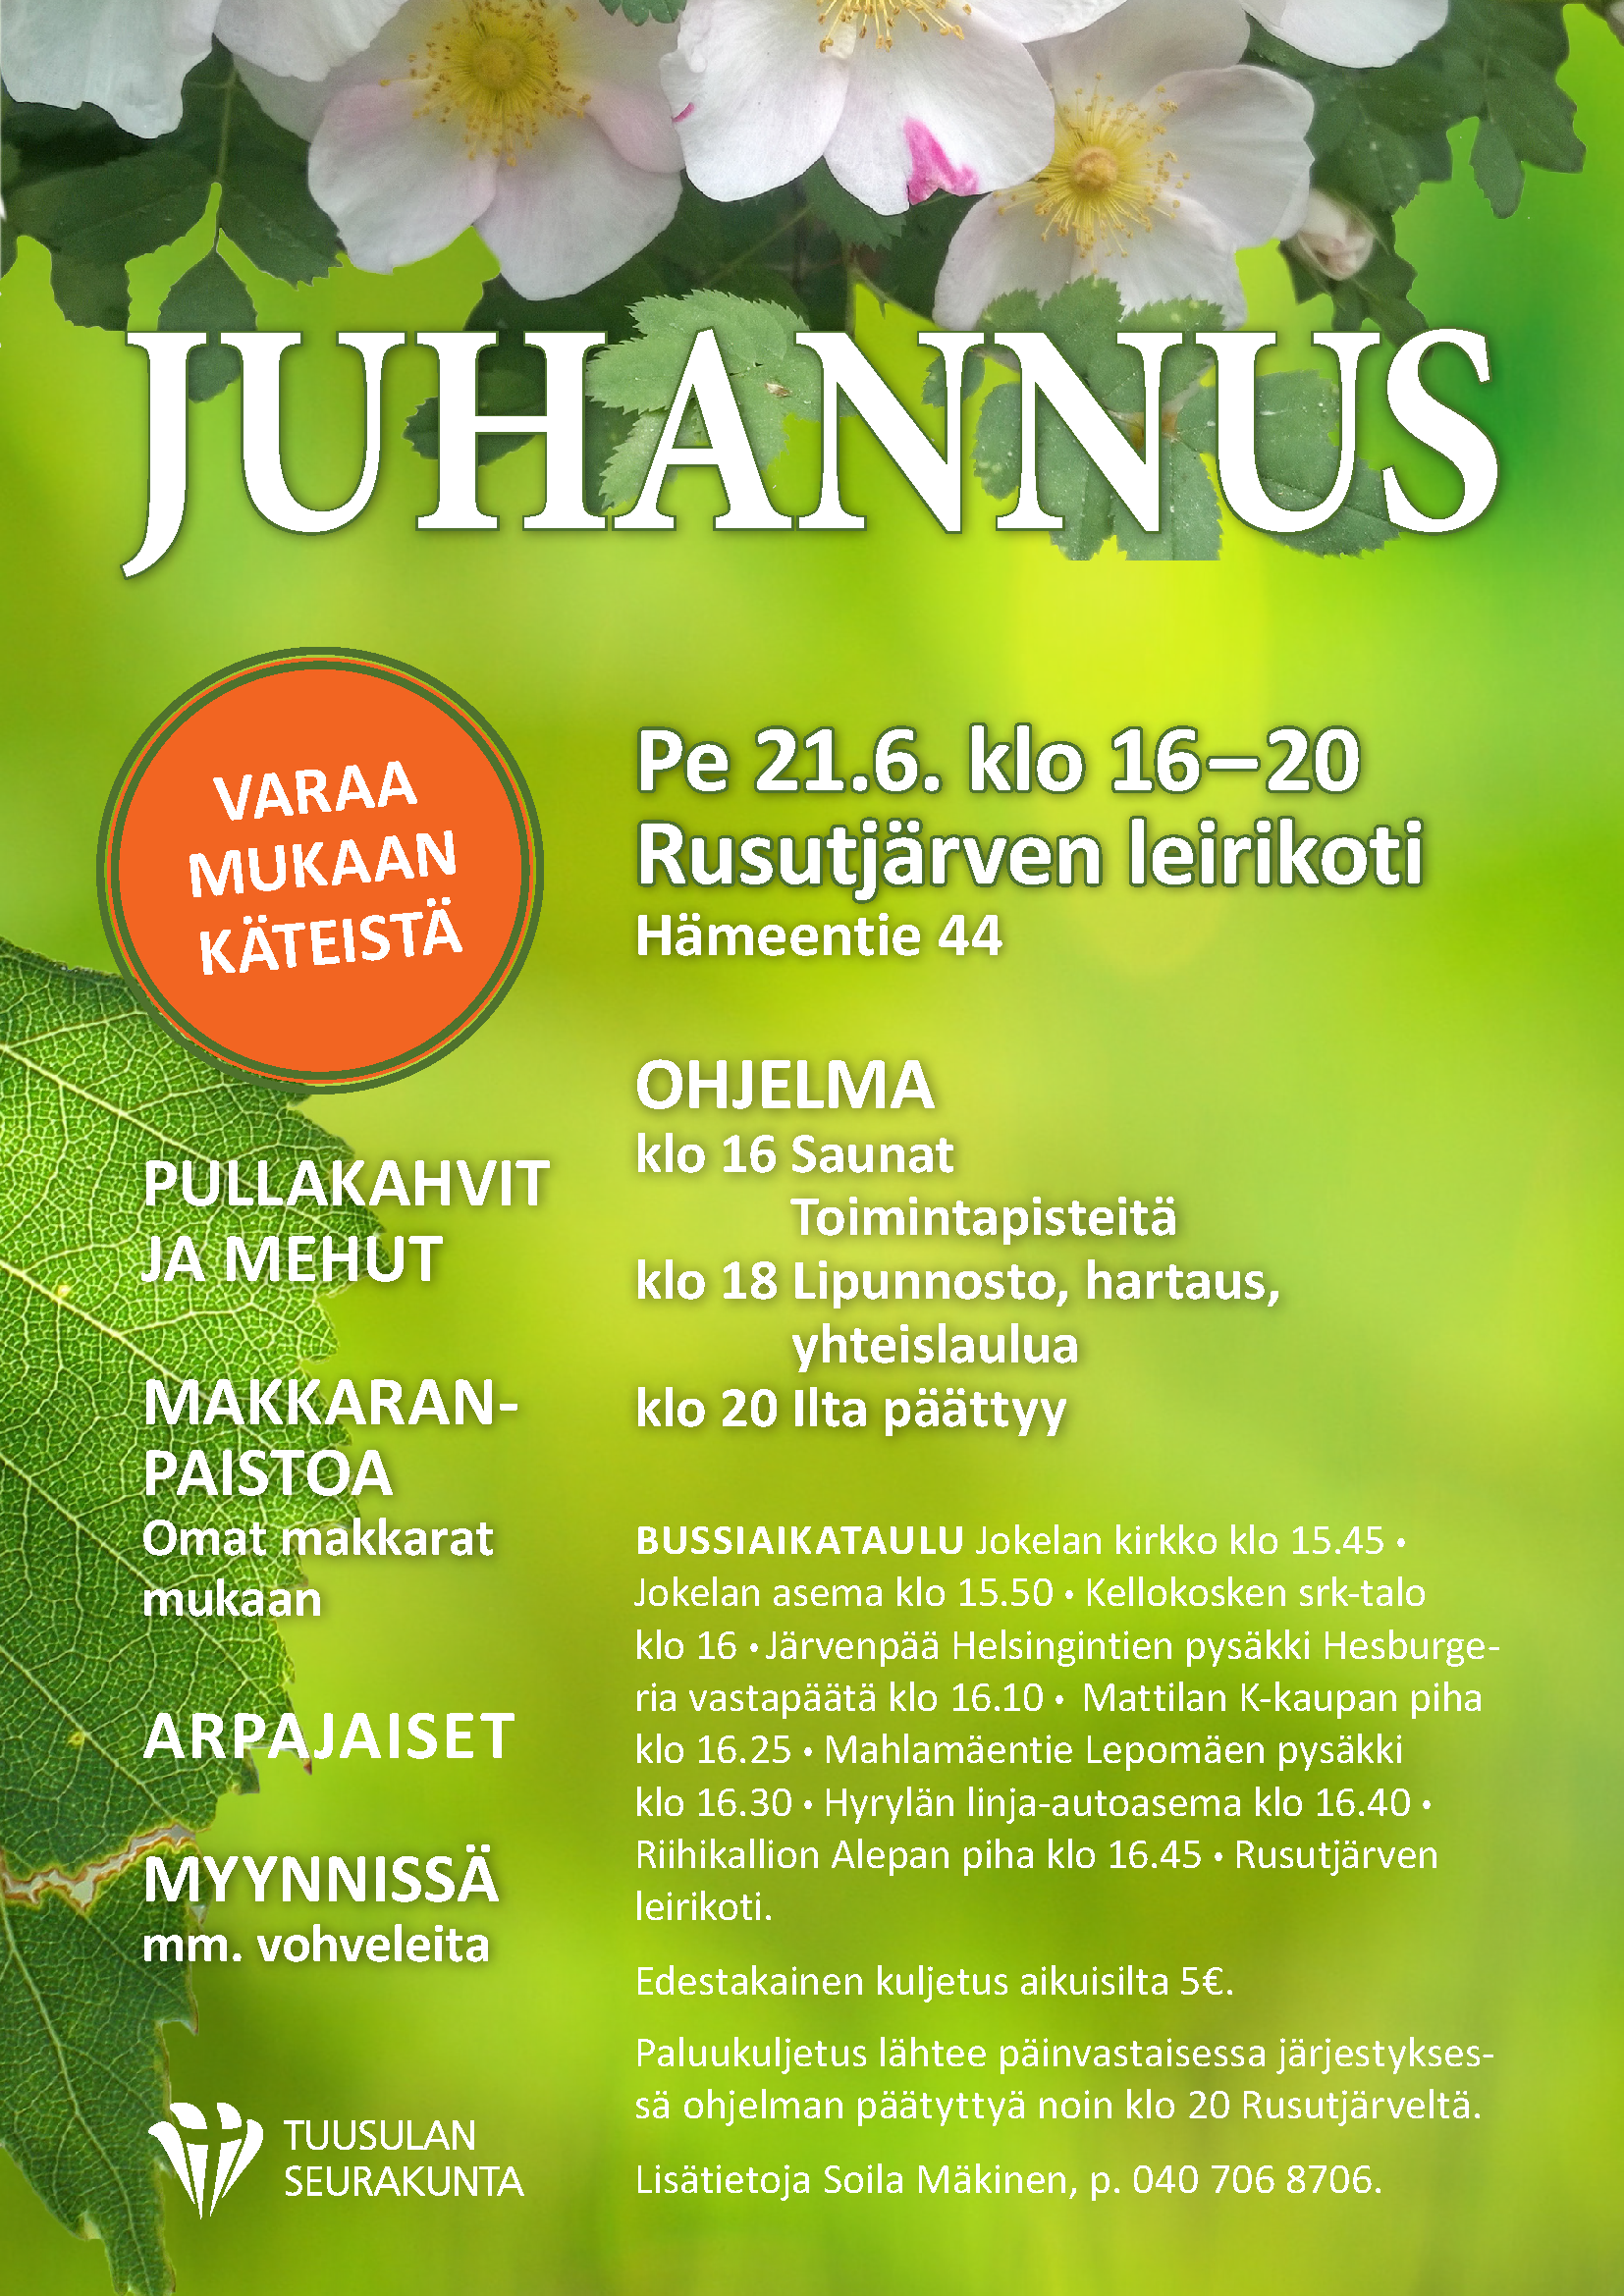 juhannus - Järvenpään seurakunta